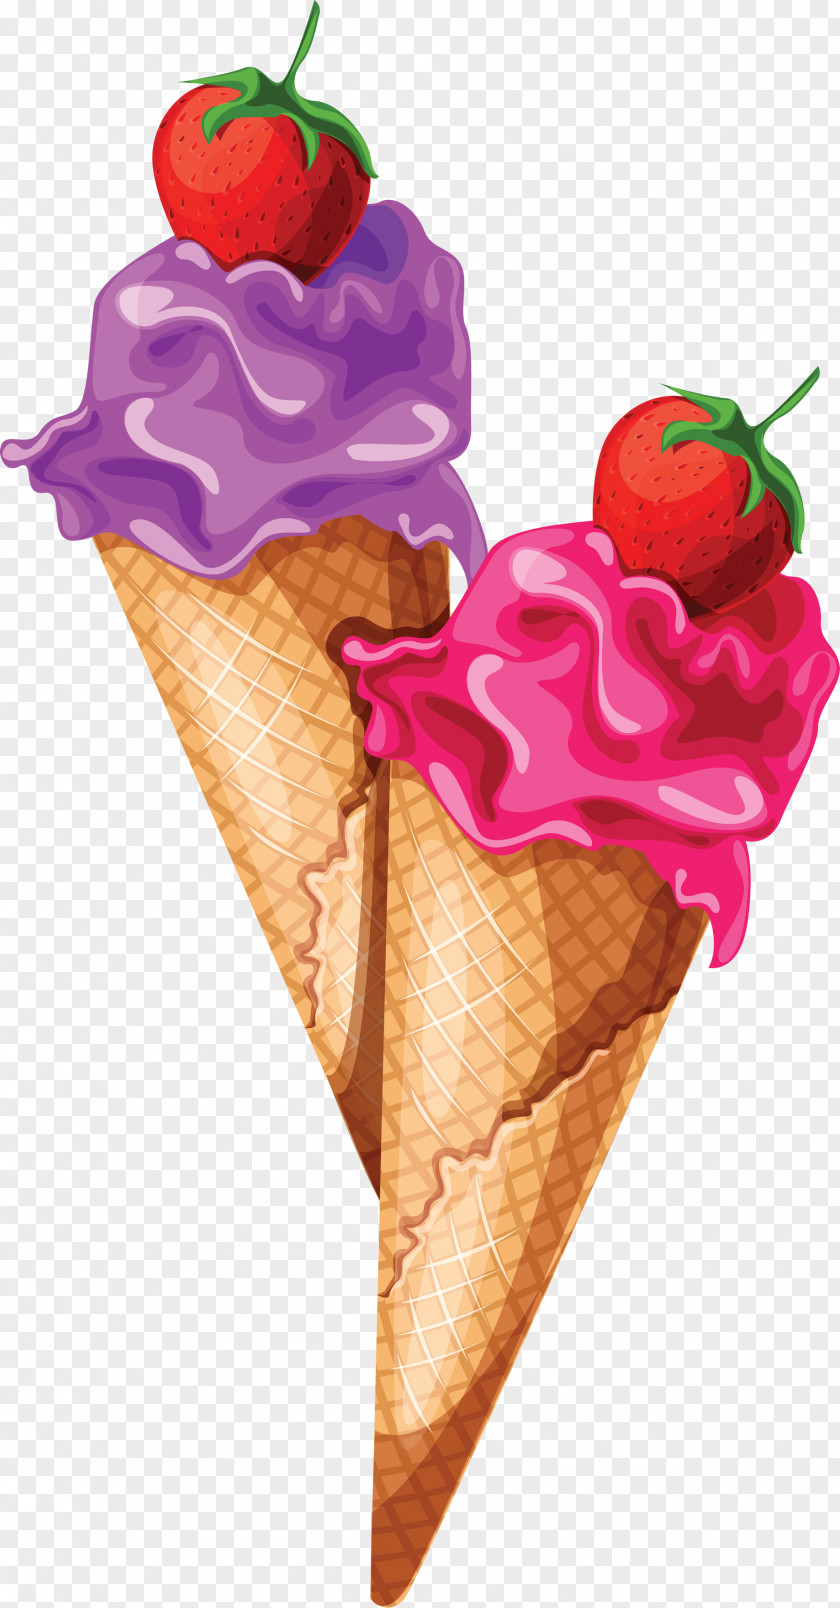 Ice Cream Image Clip Art PNG